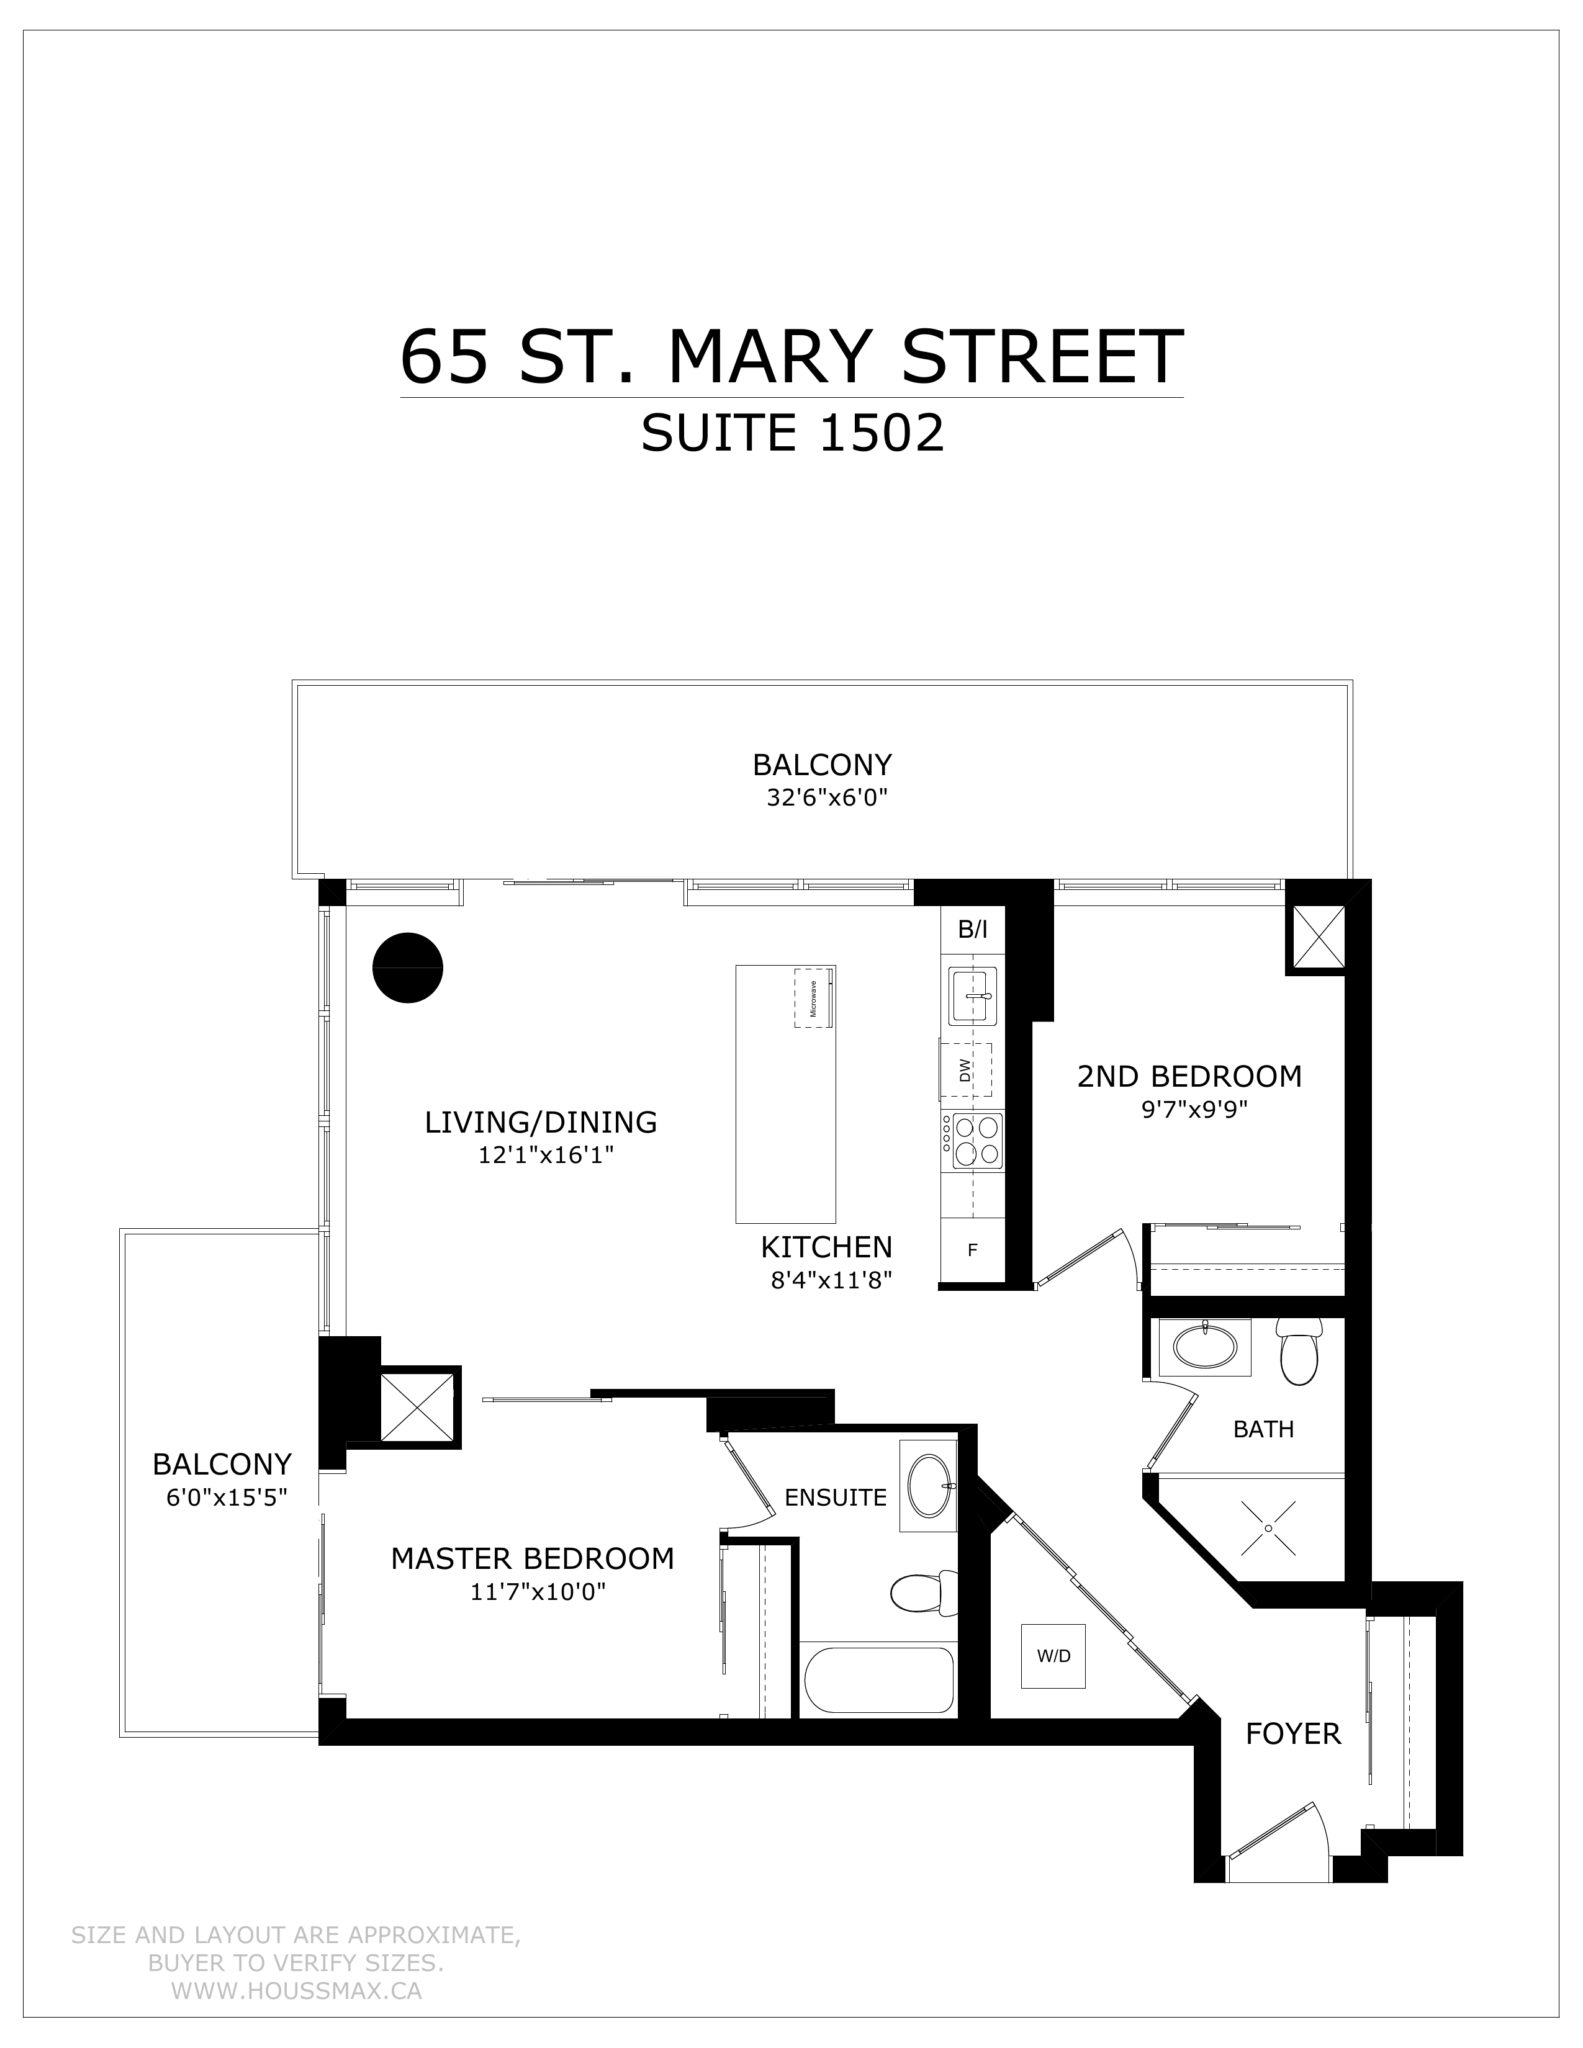 Floor Plans for 65 St Mary Street Unit 1502